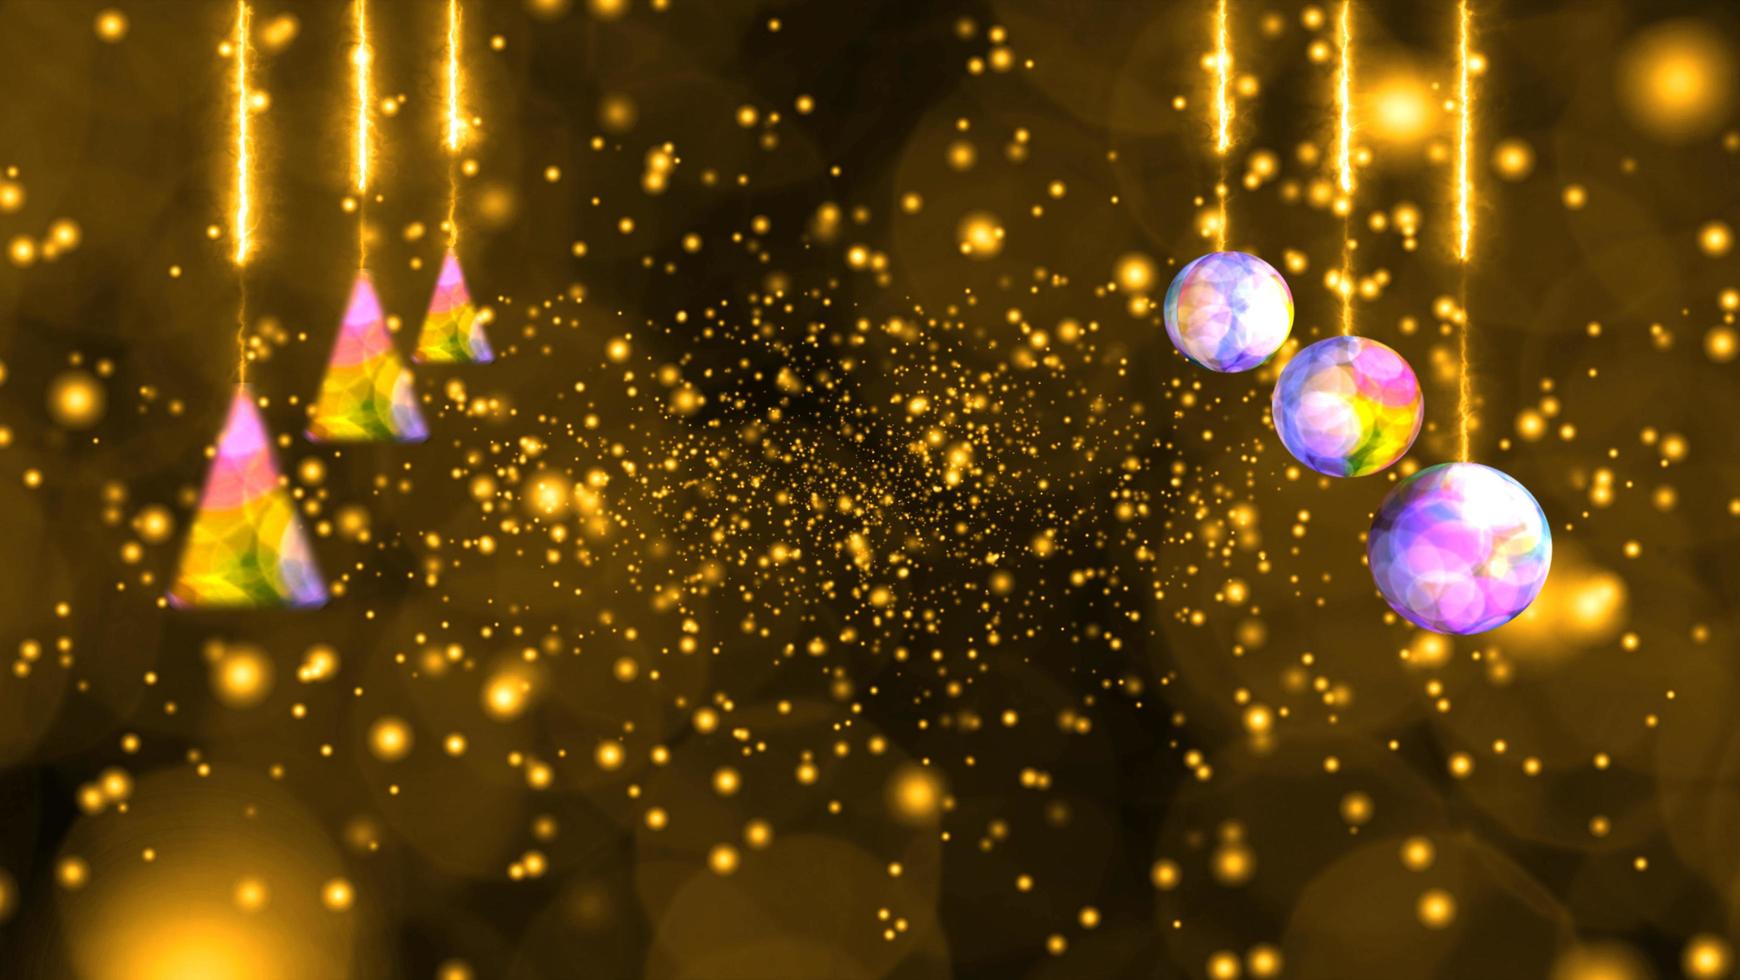 Balls lights and deep gold snow falling blink luxury golden tone photo